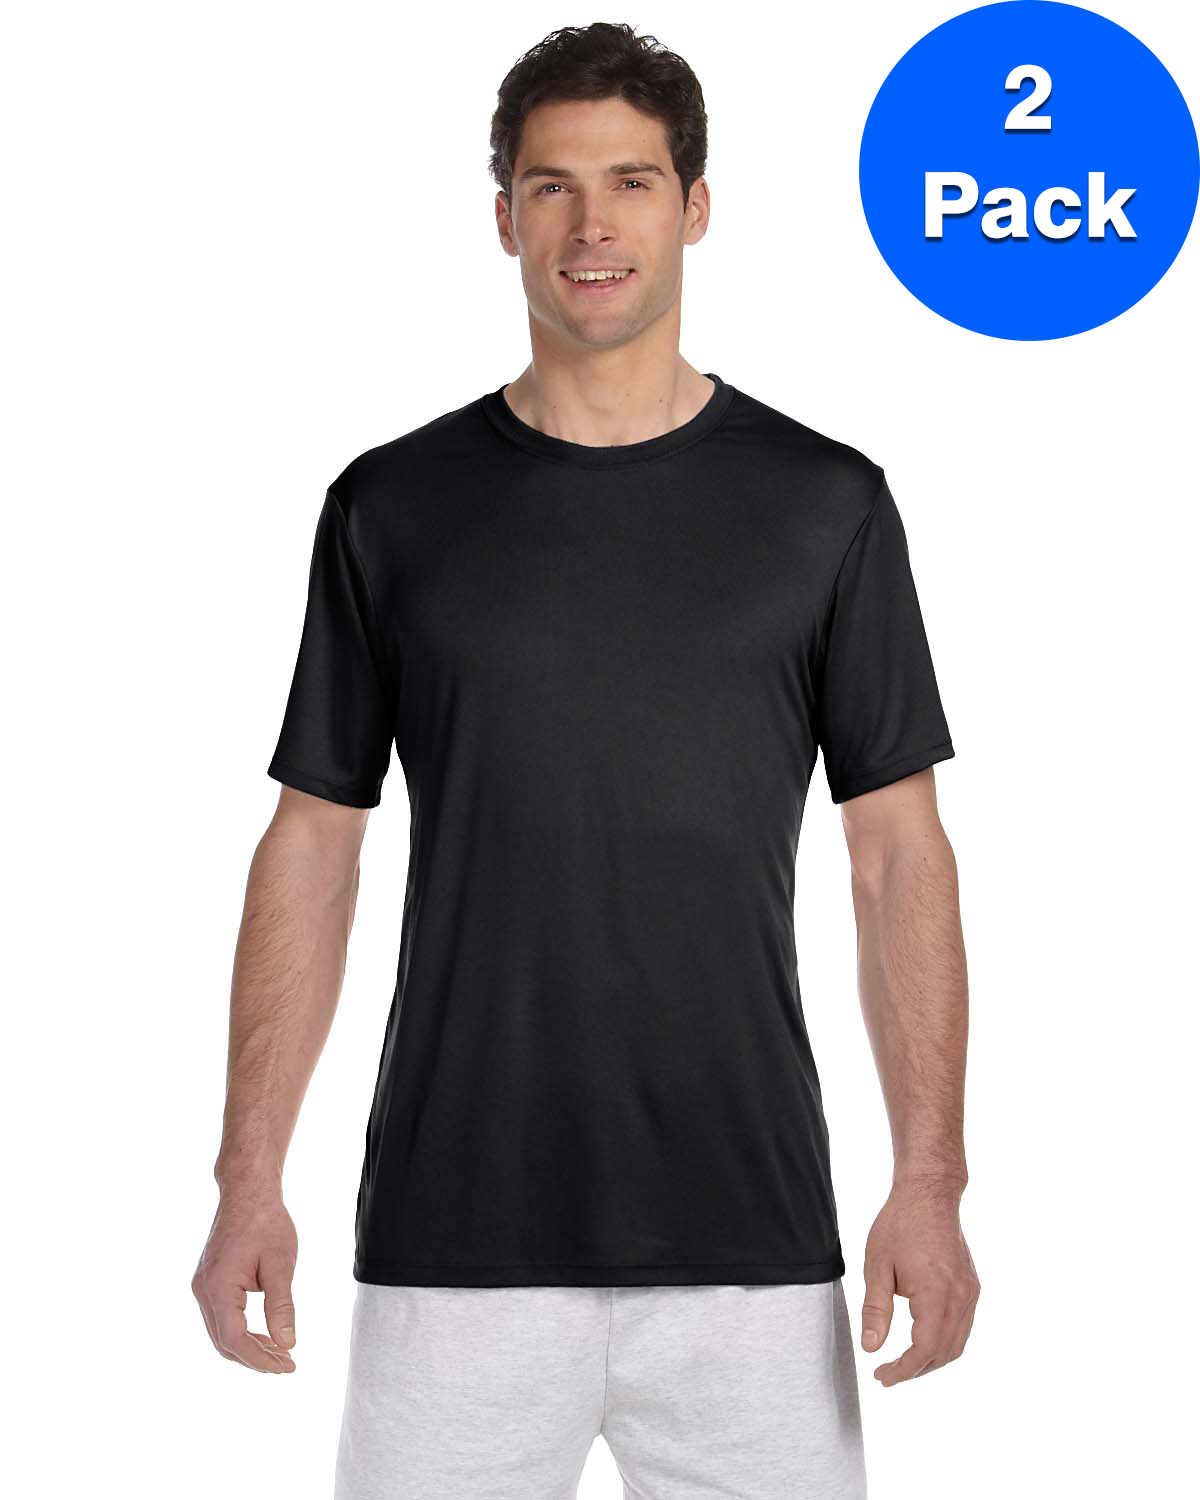 Mens Cool DRI TAGLESS Men's T-Shirt 4820 (2 PACK) - image 1 of 1